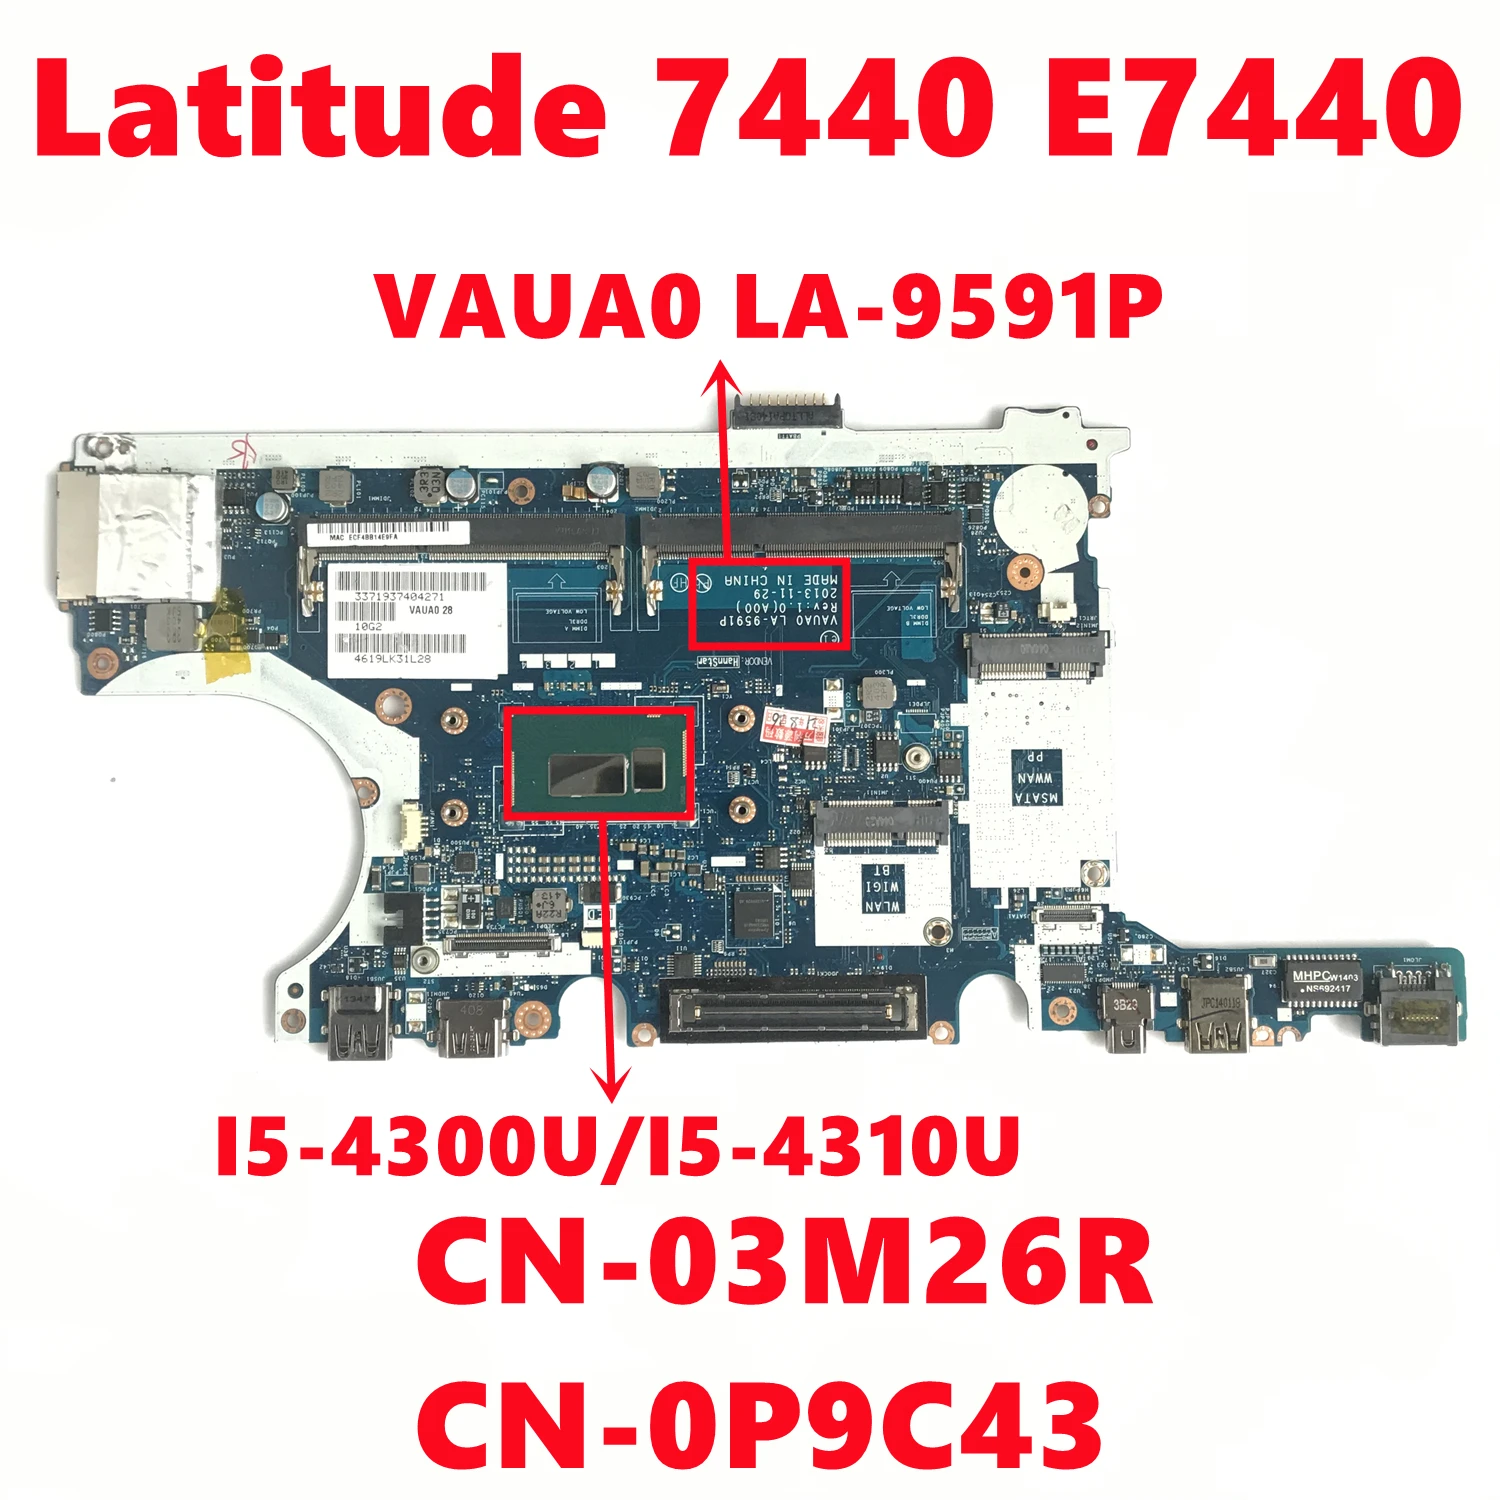 Фонарь 3M26R фонарь P9C43 для dell Latitude 7440 E7440 материнская плата ноутбука с фонариком